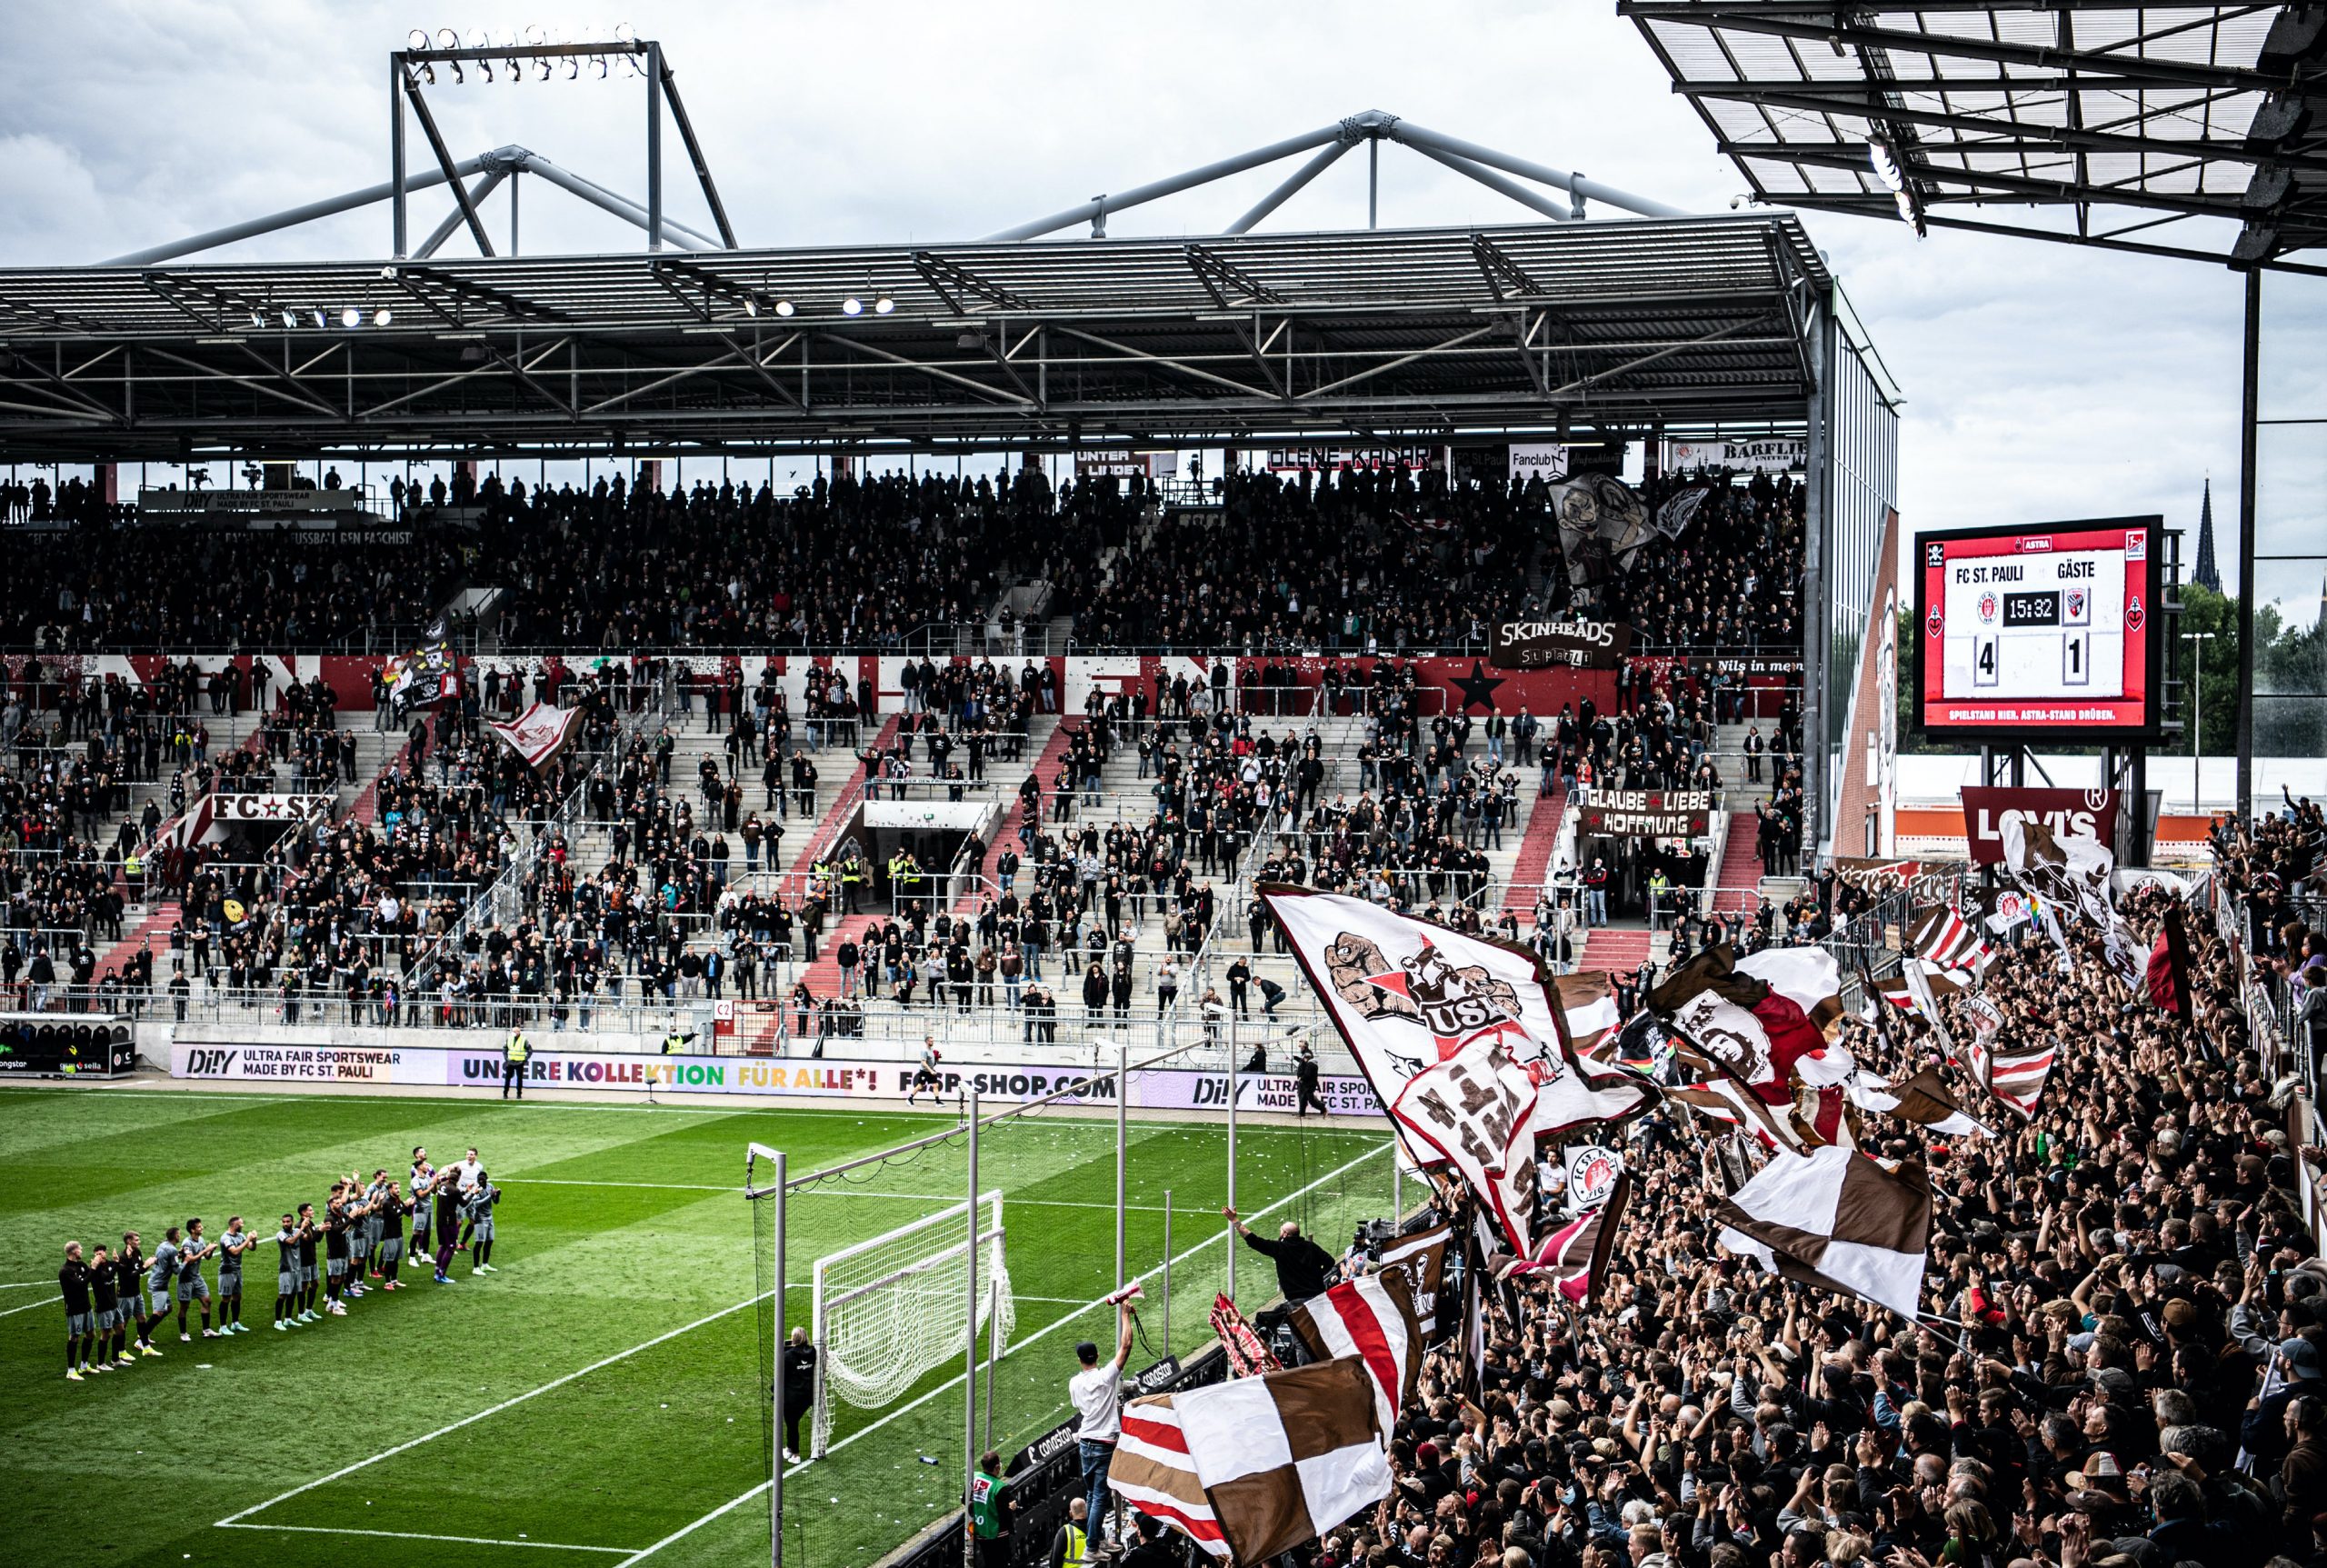 FC St. Pauli, Millerntor, Fans